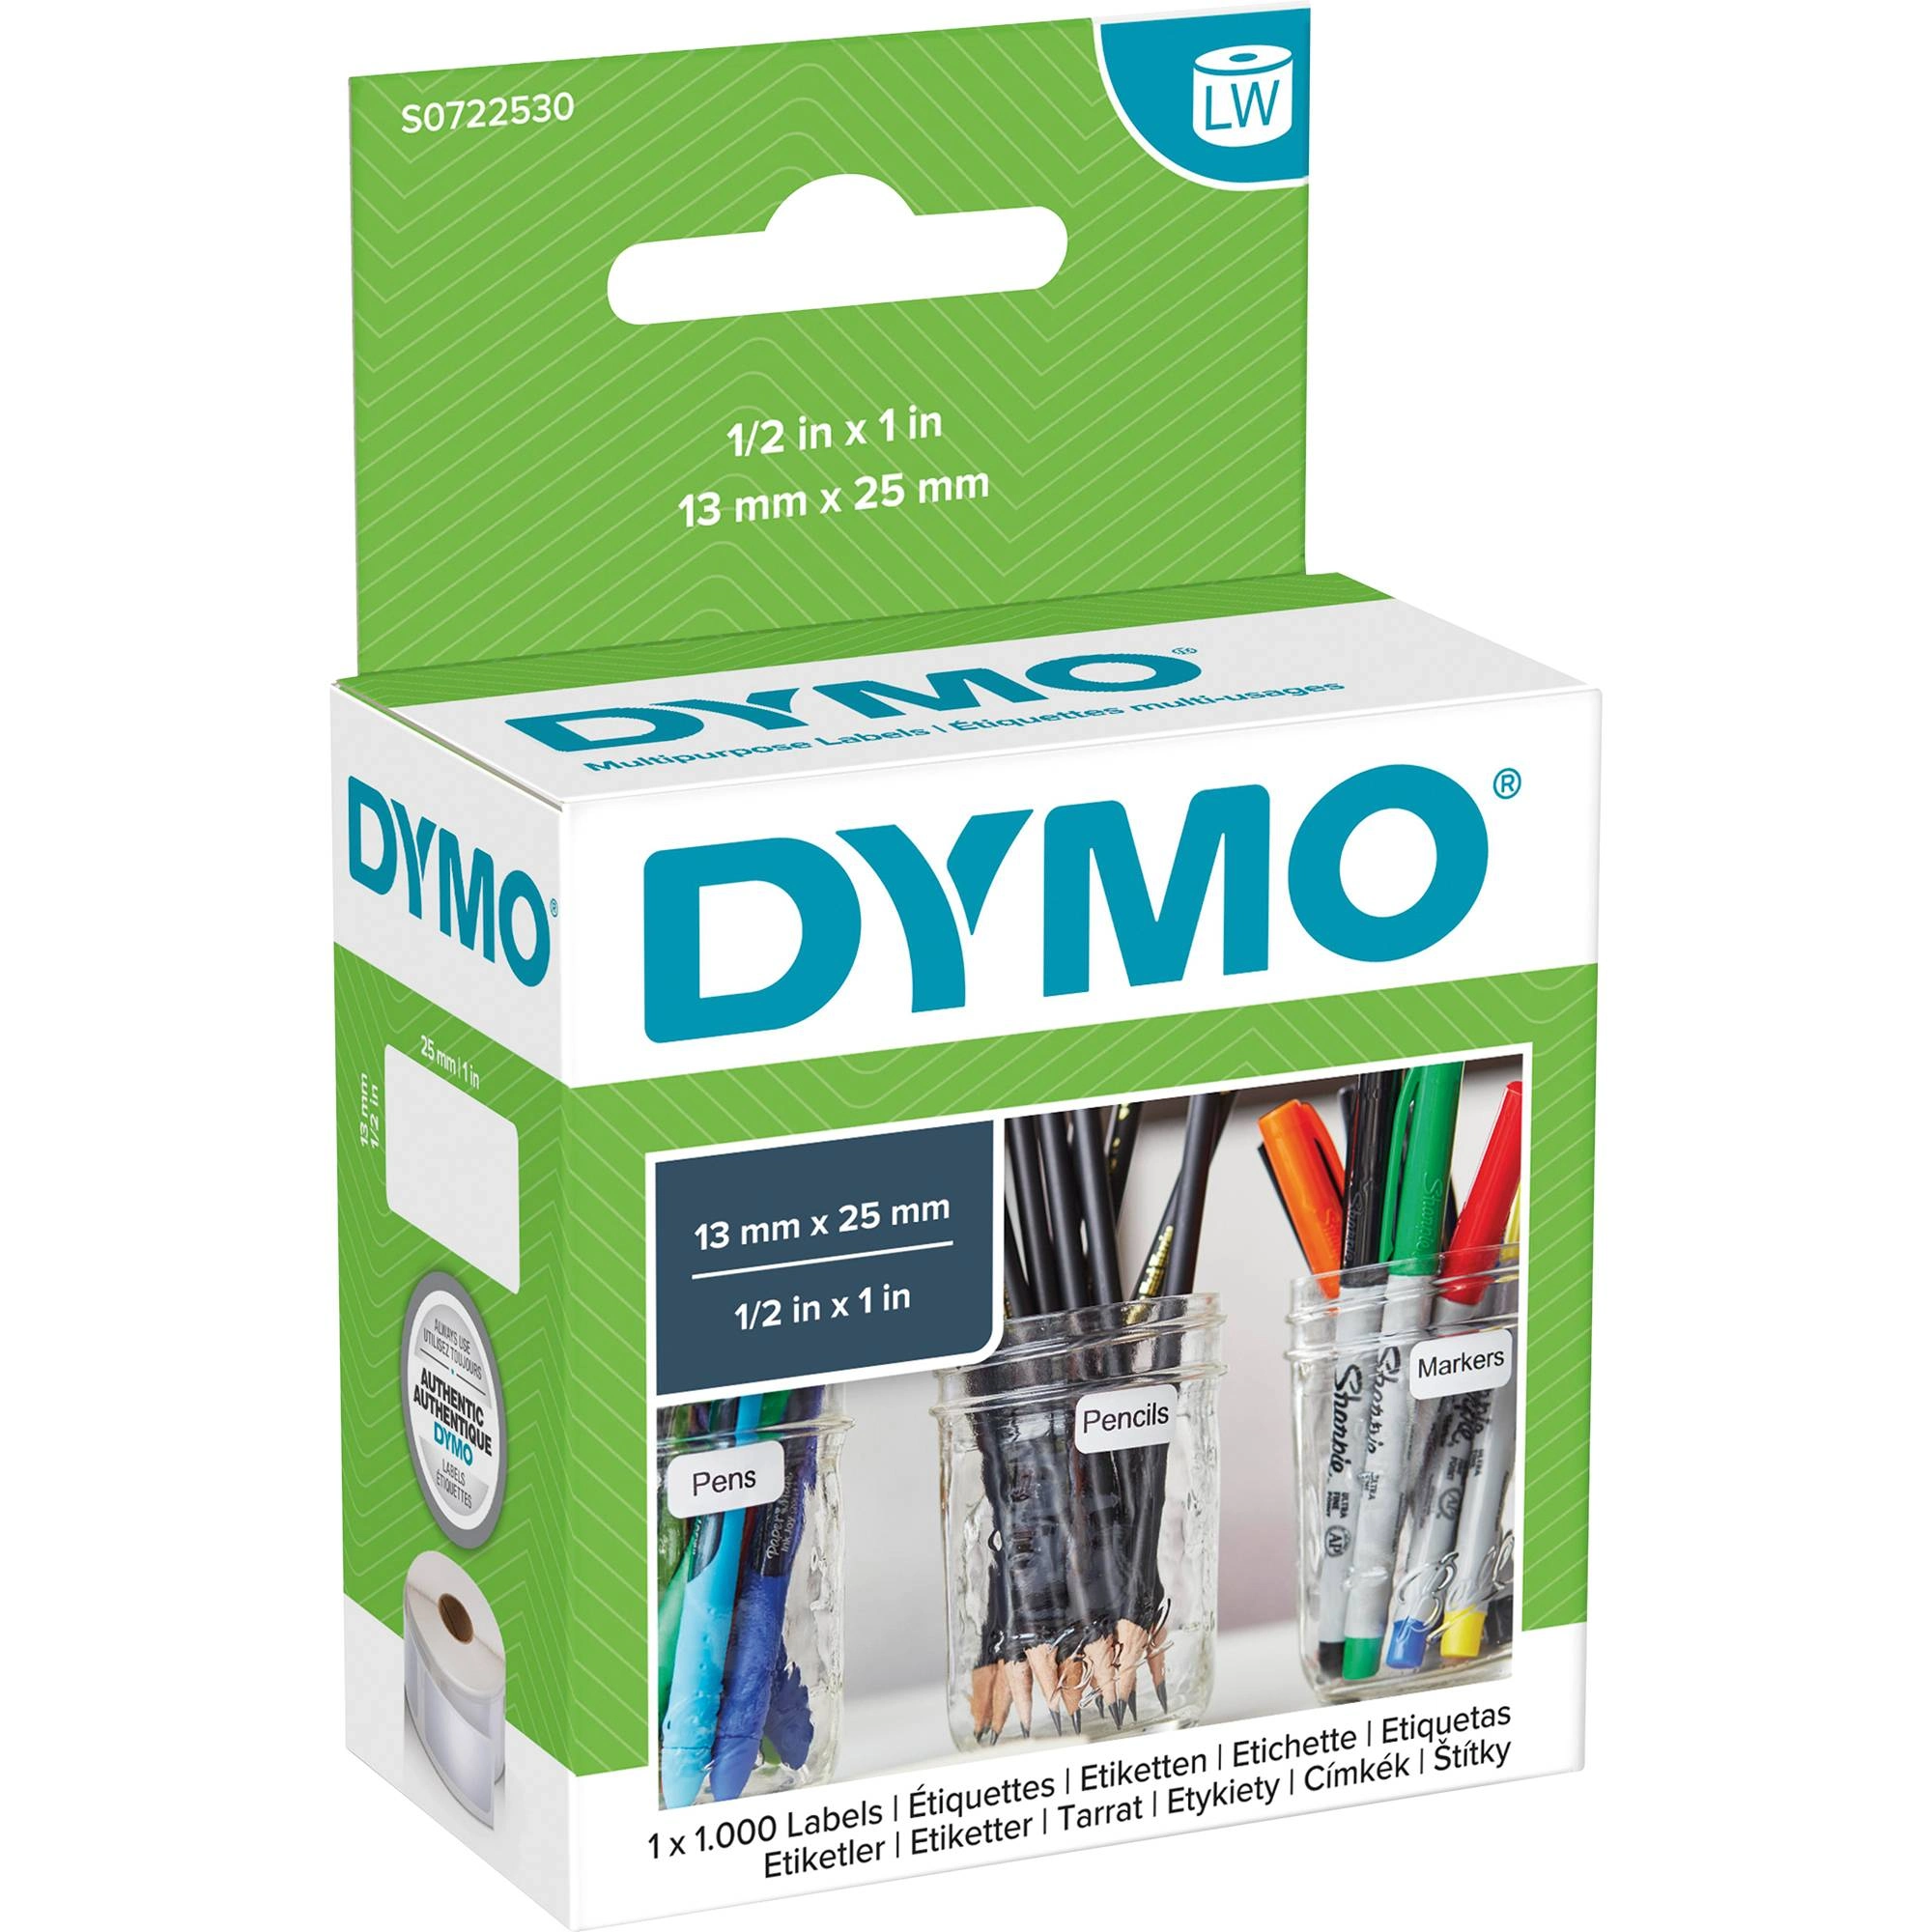 S0722530 Dymo LW 25mm x 13mm 1000 labels per Roll (11353)